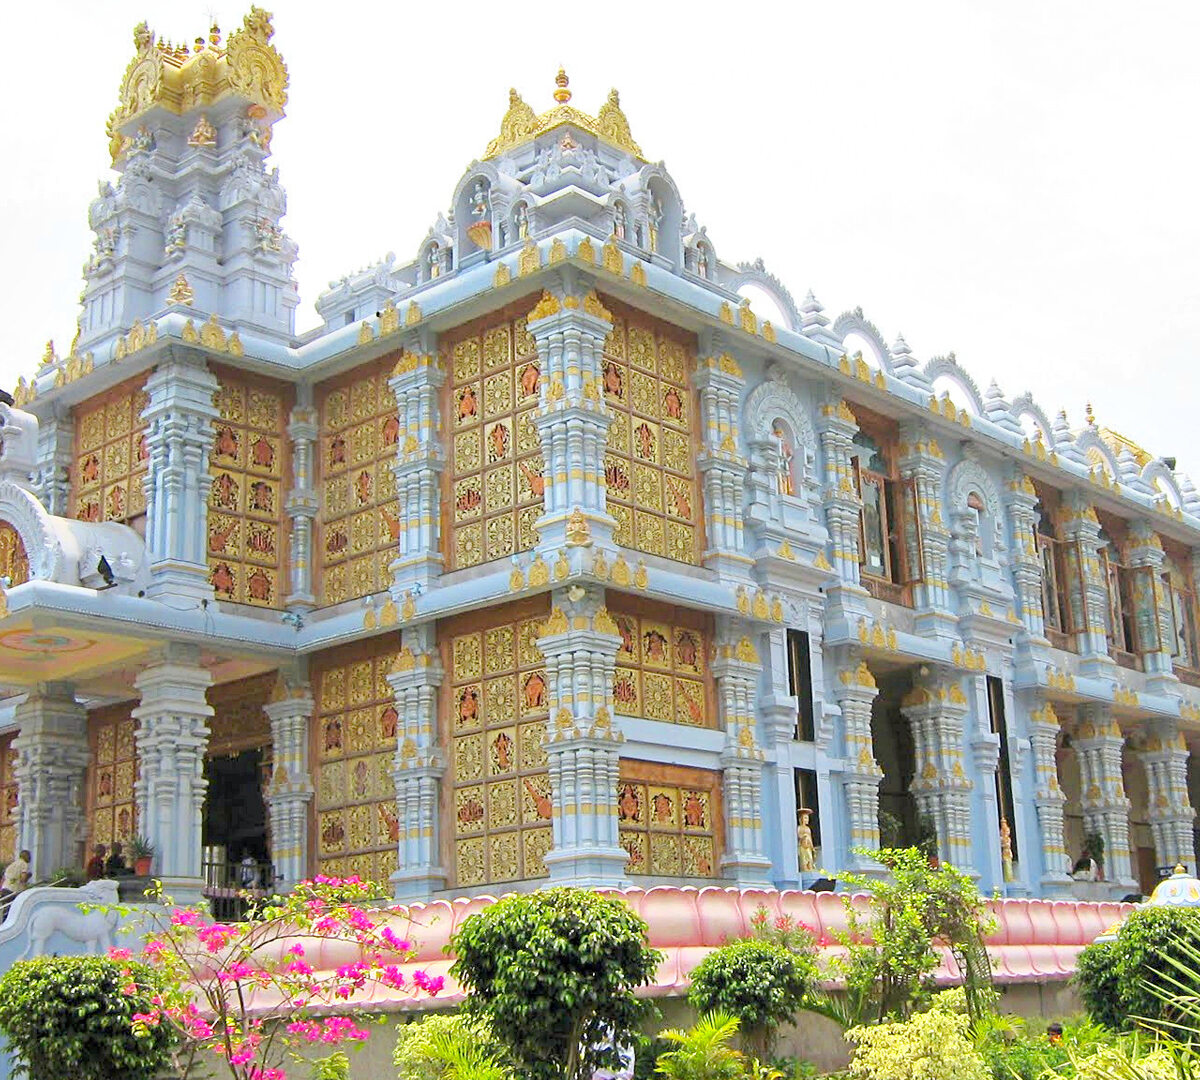 Tirupati